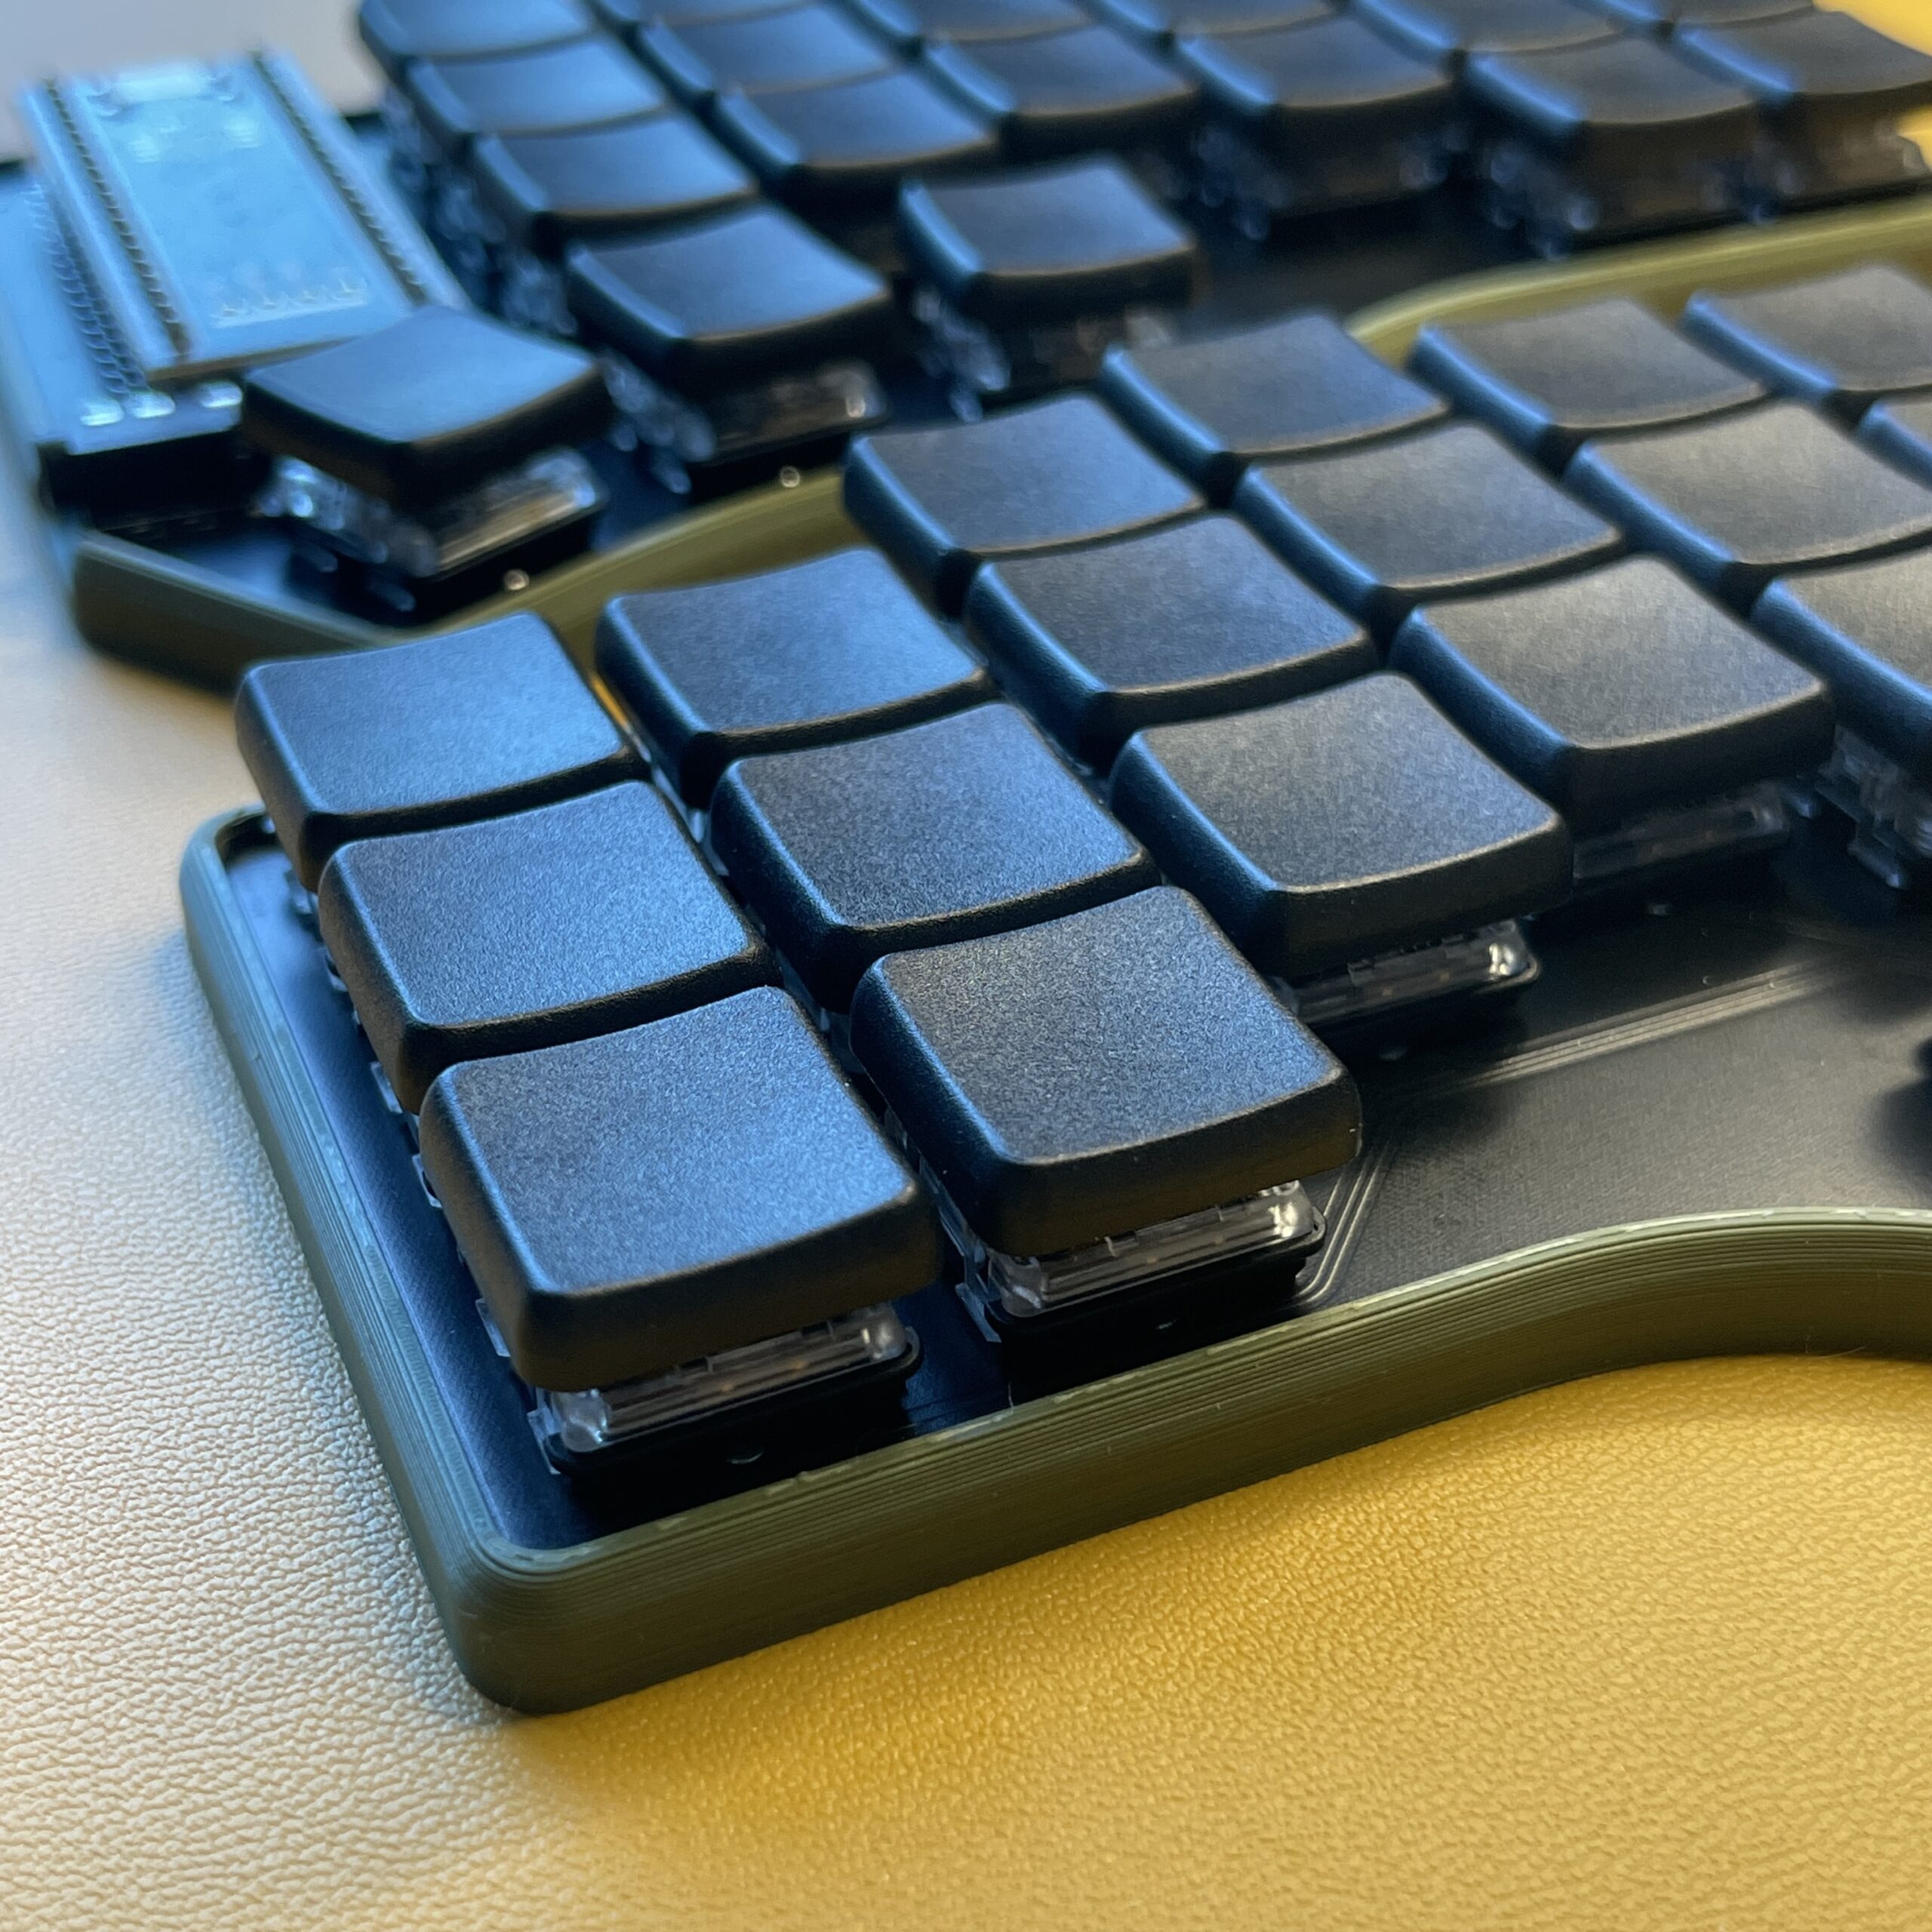 Pre-soldered Cantor Keyboard